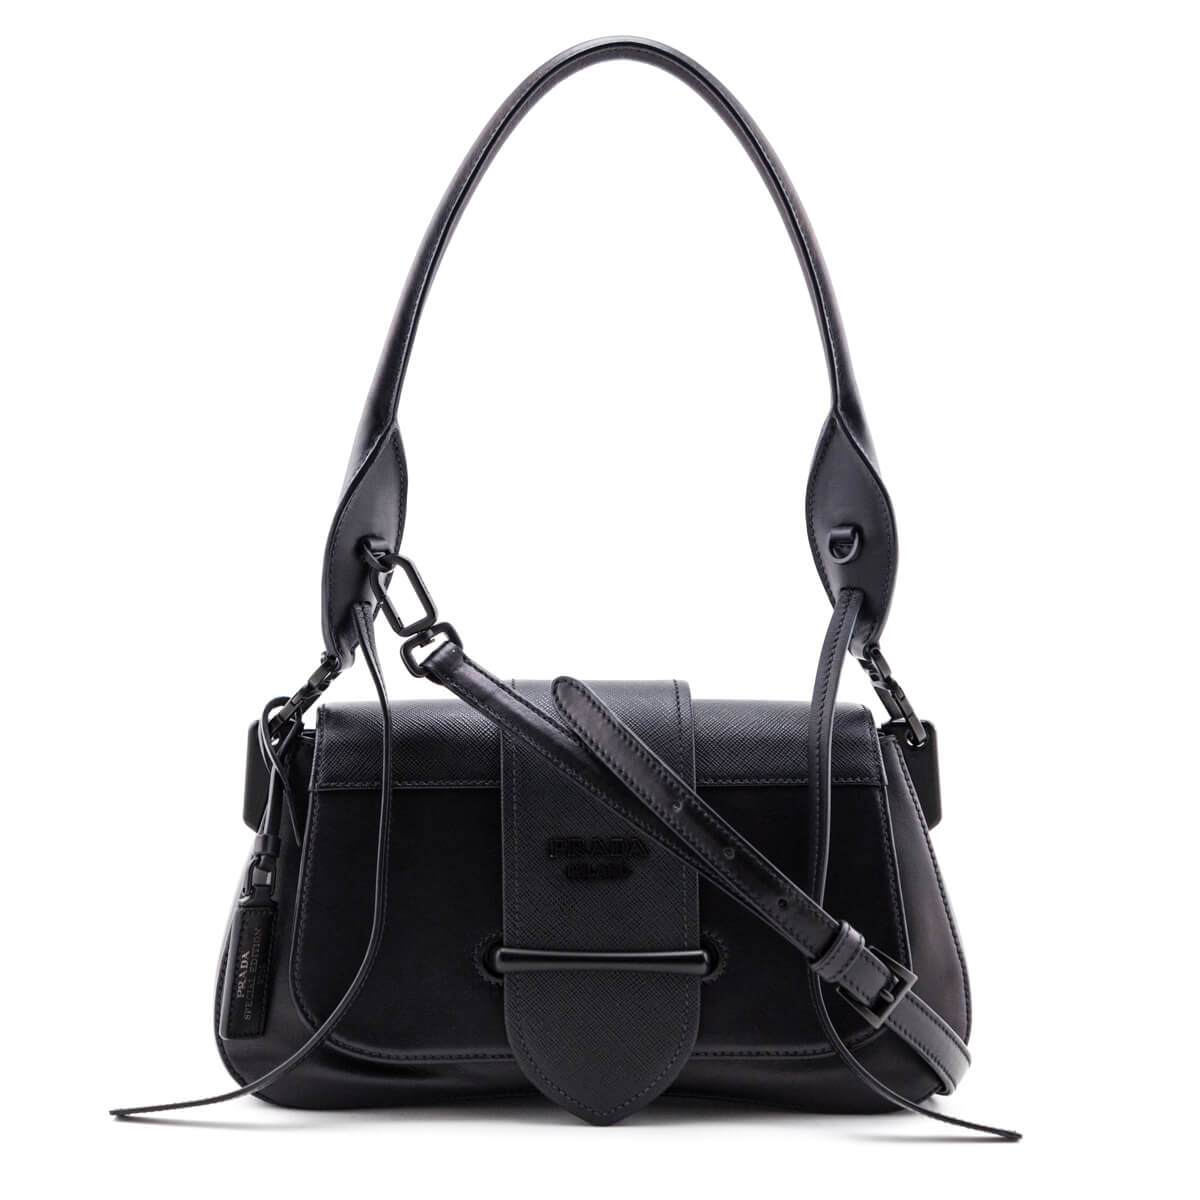 Prada Sidonie Leather Shoulder Bag White / Black – newlookbag